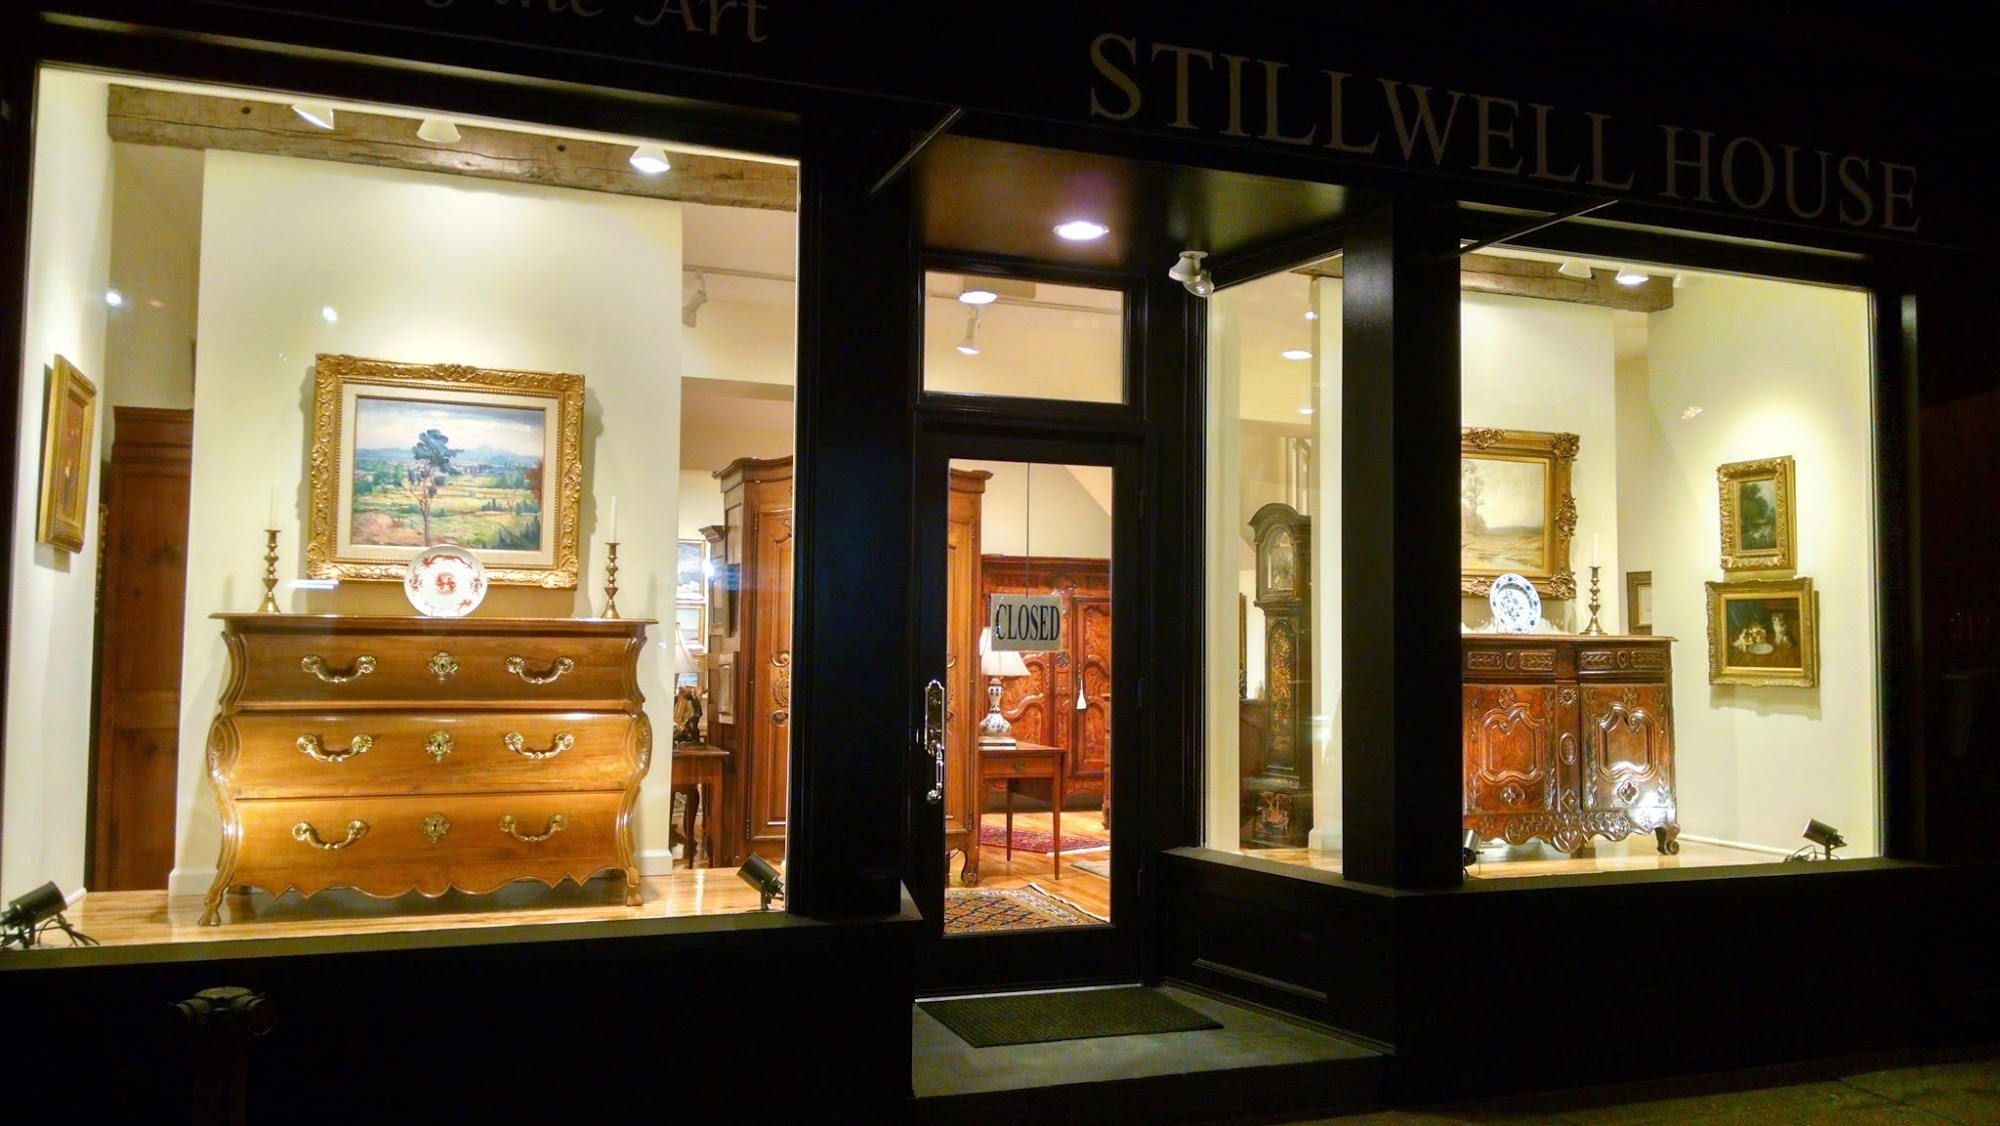 Stillwell House Fine Art & Antiques